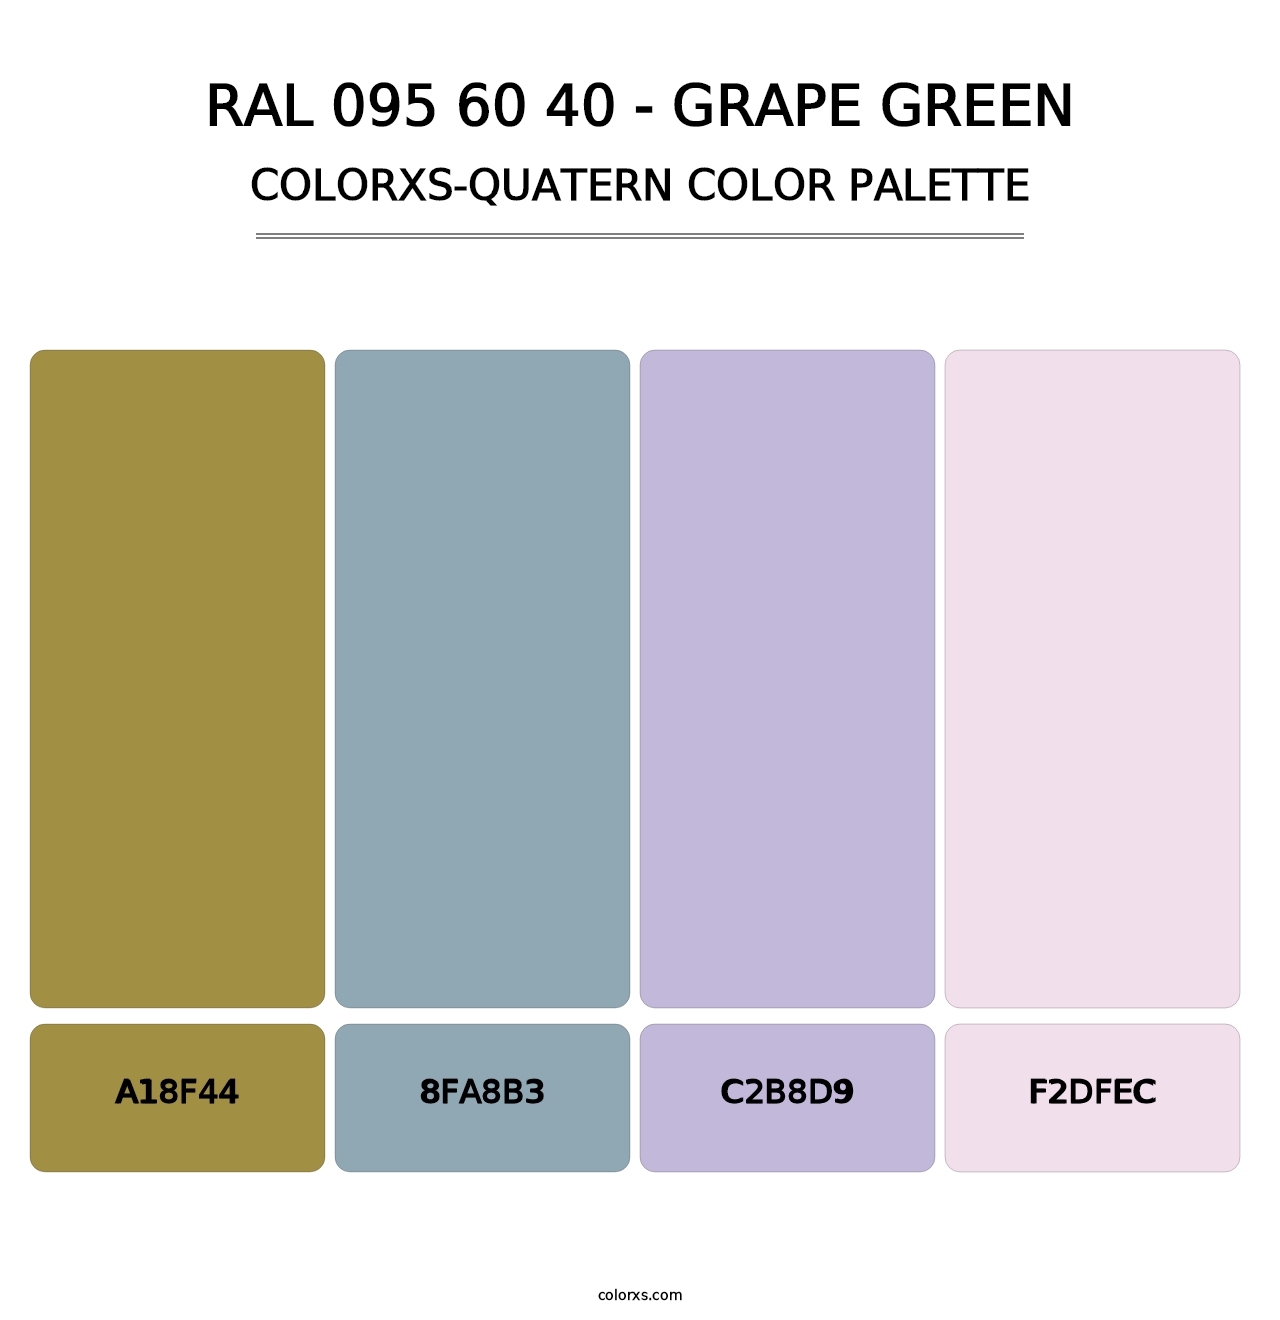 RAL 095 60 40 - Grape Green - Colorxs Quatern Palette